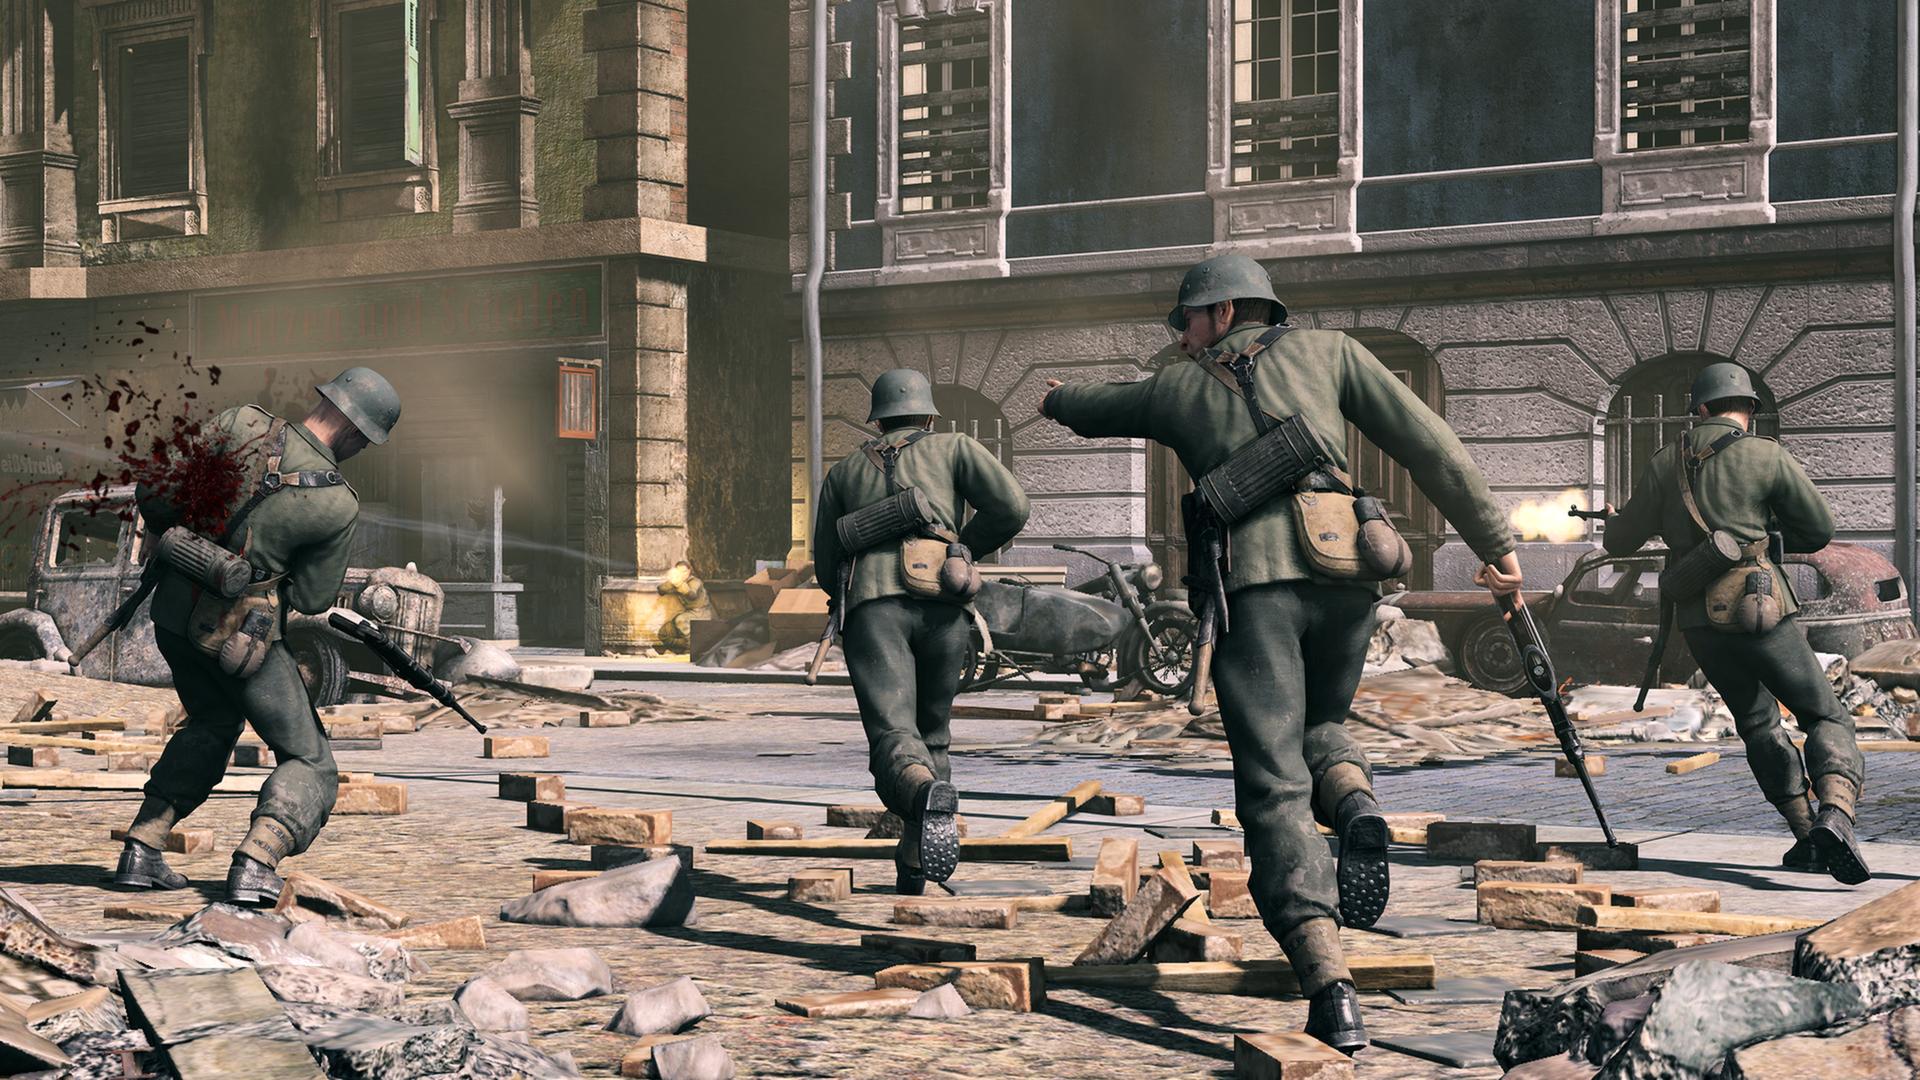 Screenshot №11 from game Sniper Elite V2